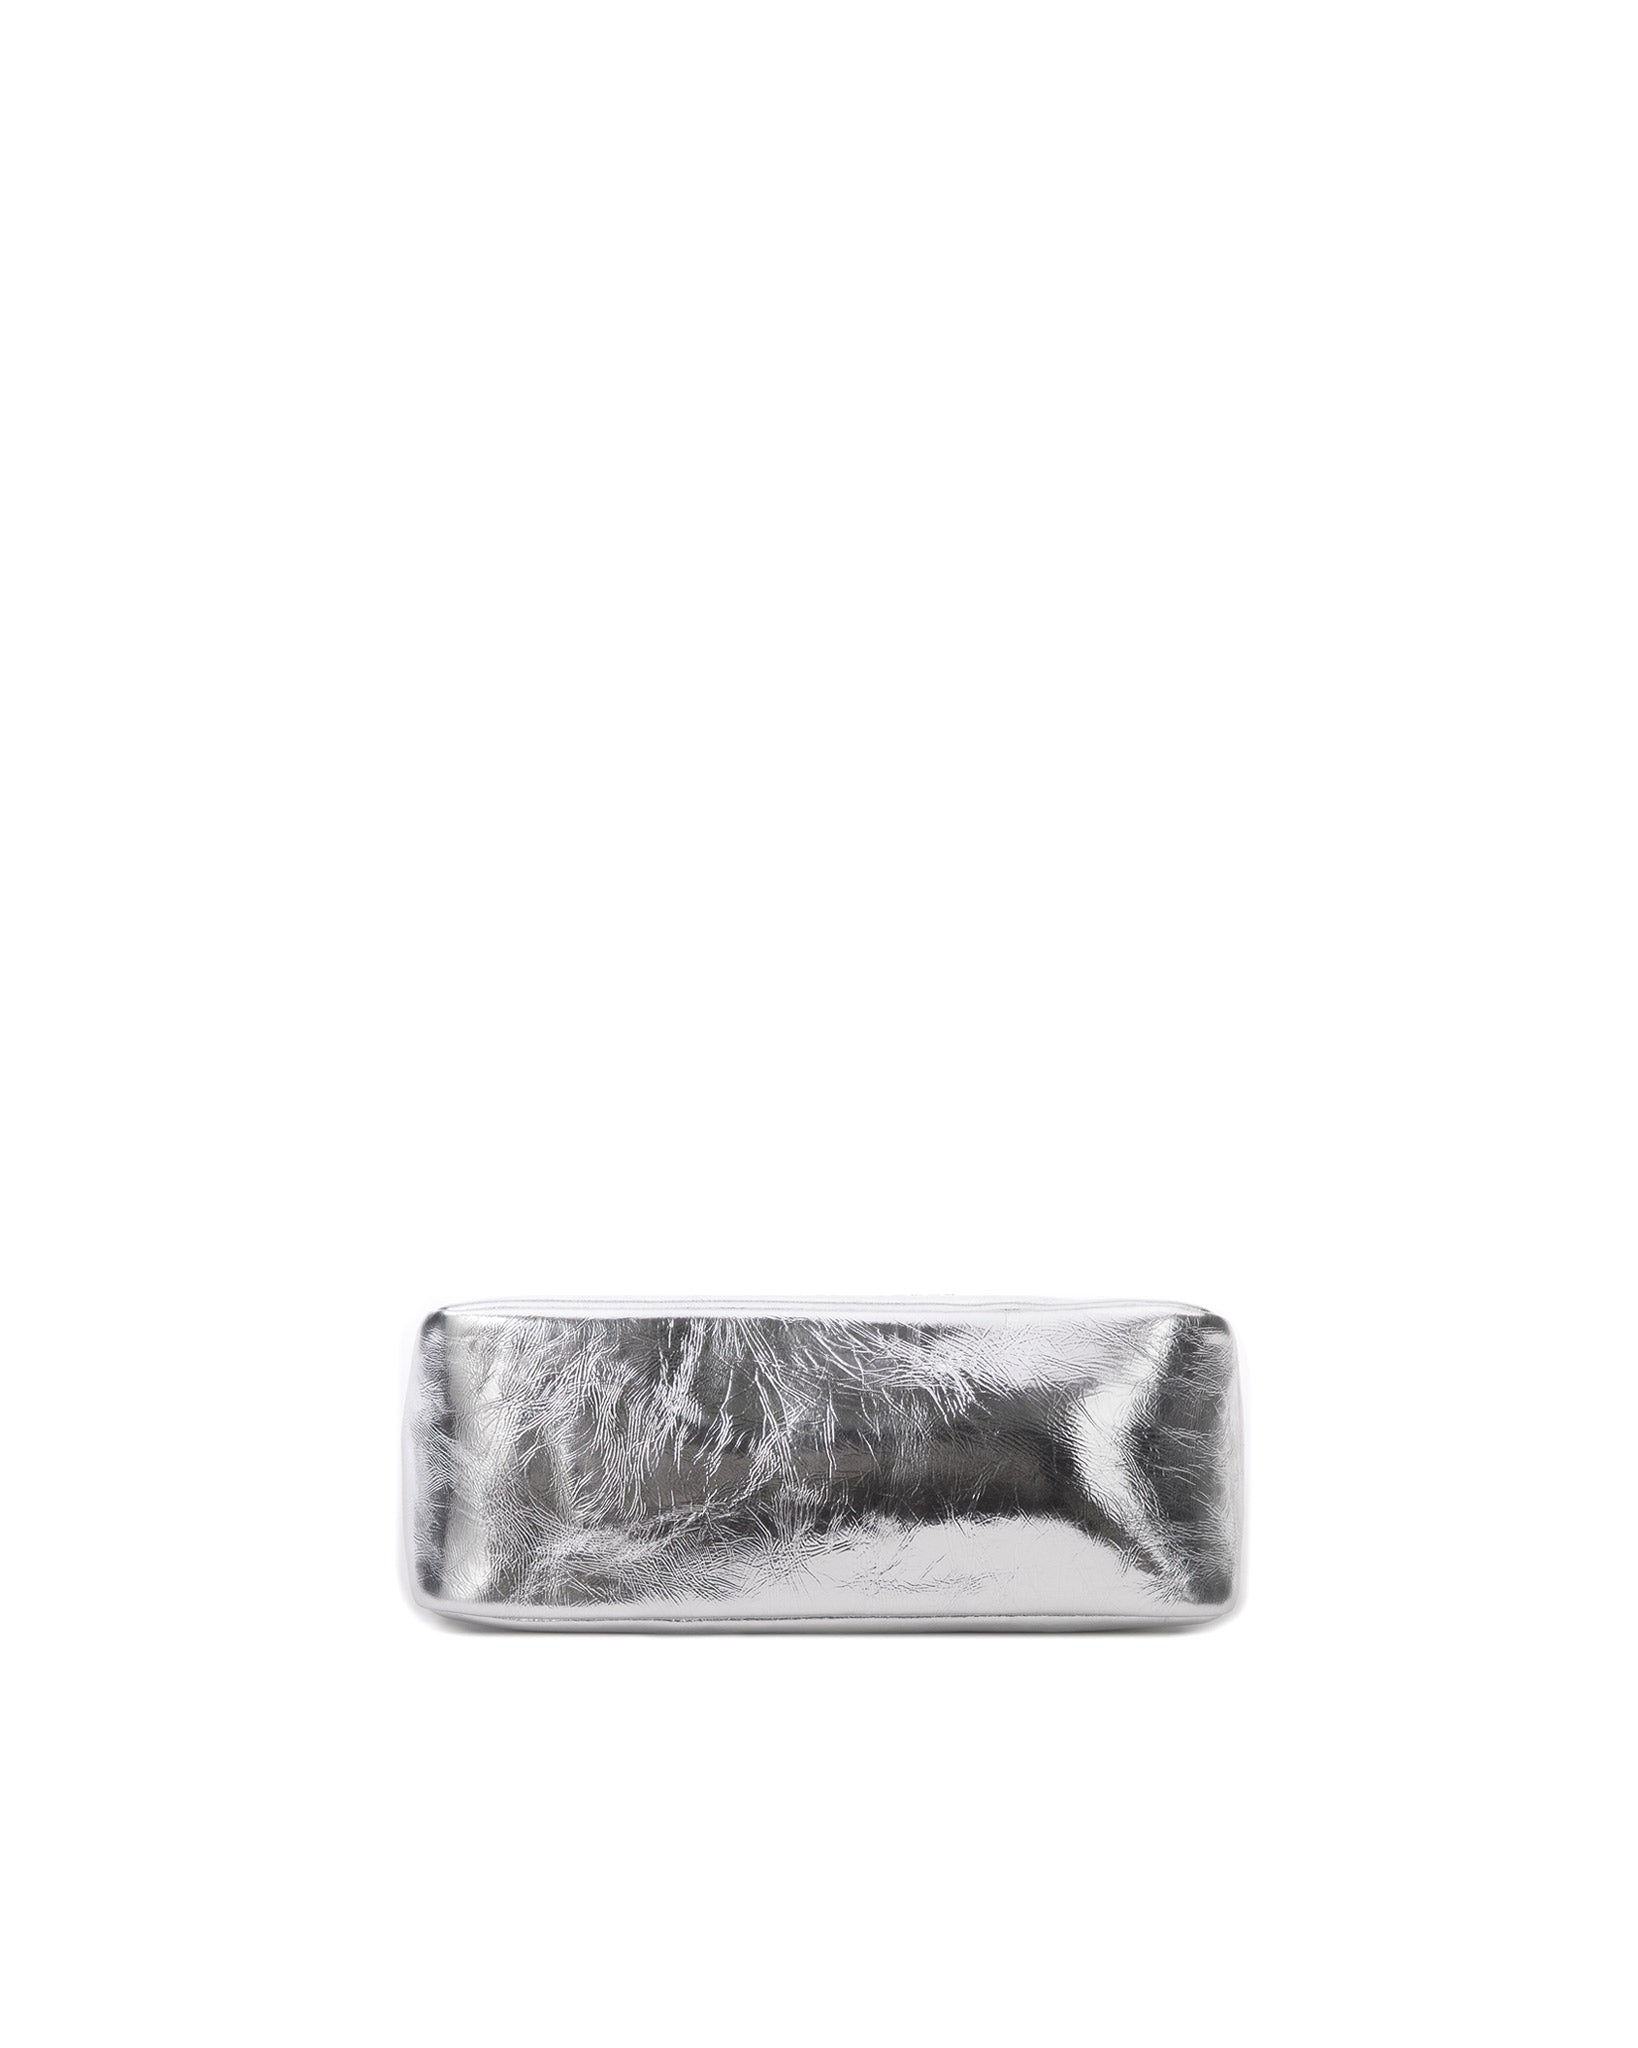 Brandon Blackwood New York - Cortni Bag - Cracked Metallic Silver Leather